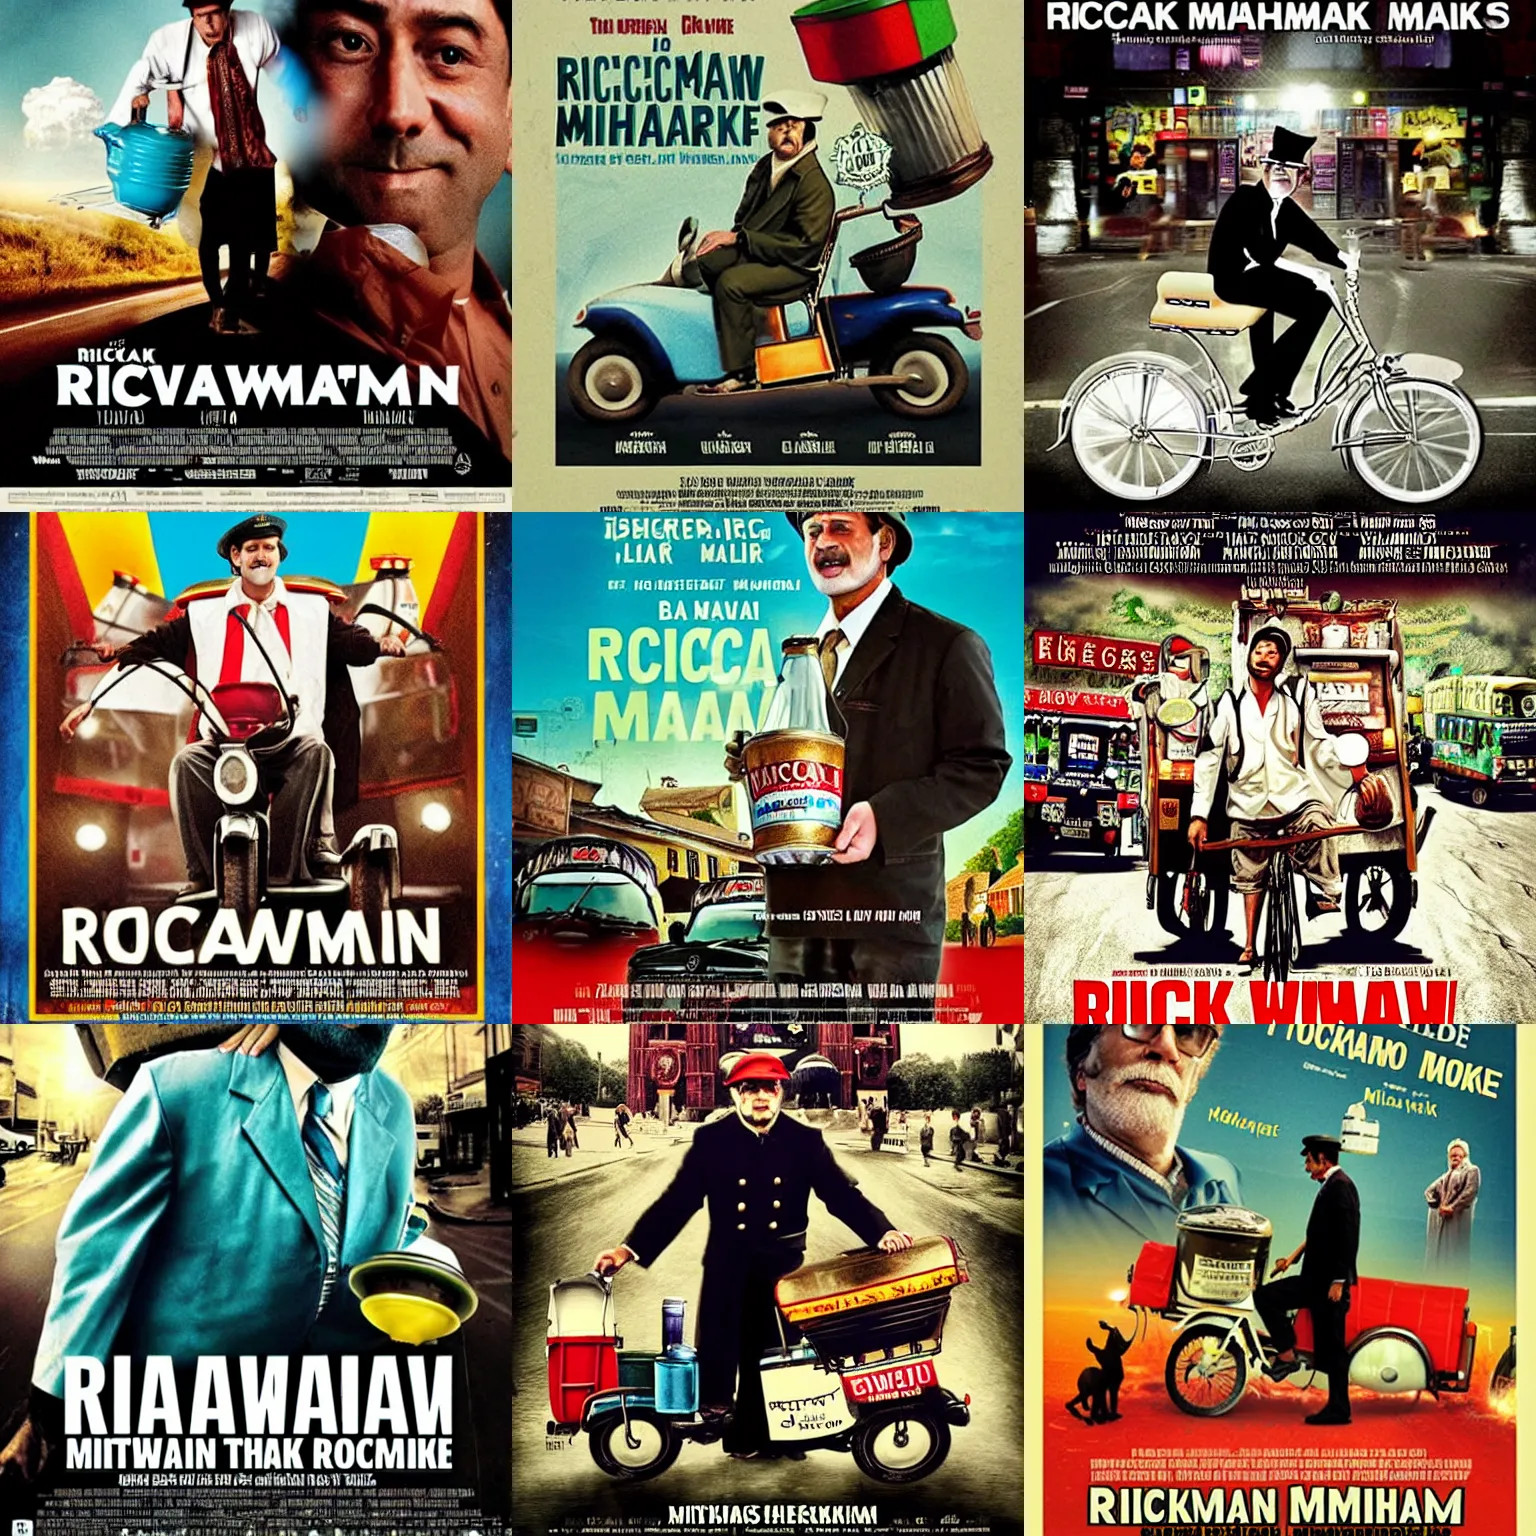 Prompt: Movie Poster for The Rickshaw Milkman Returns (2010)